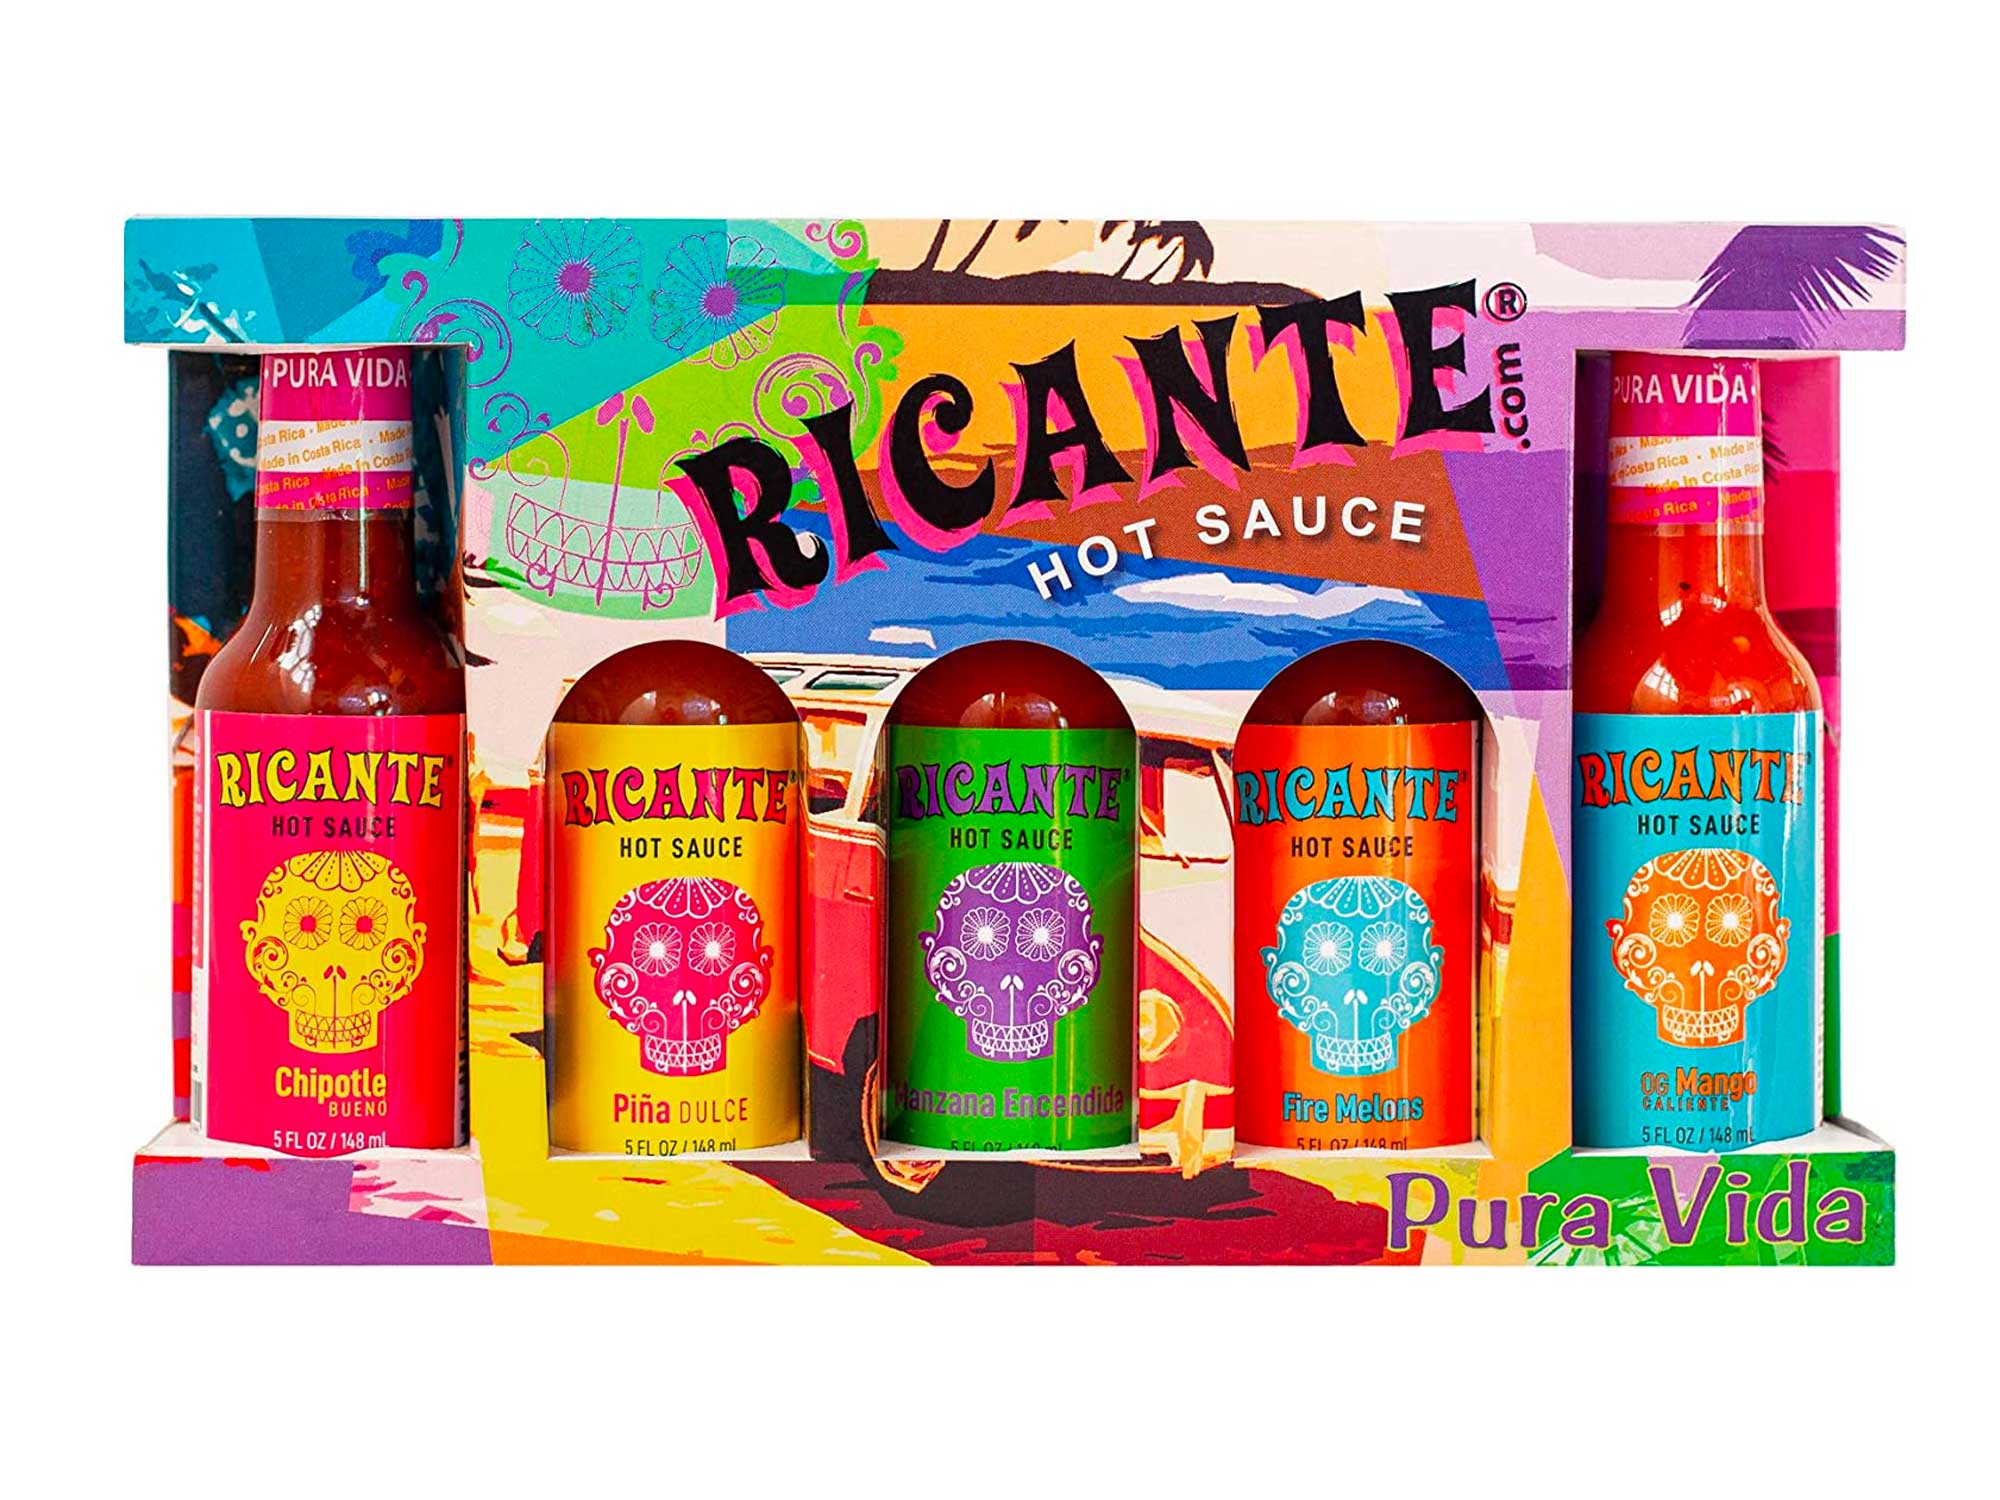 Ricante Hot Sauce 5-Flavor Assortment Gift Box